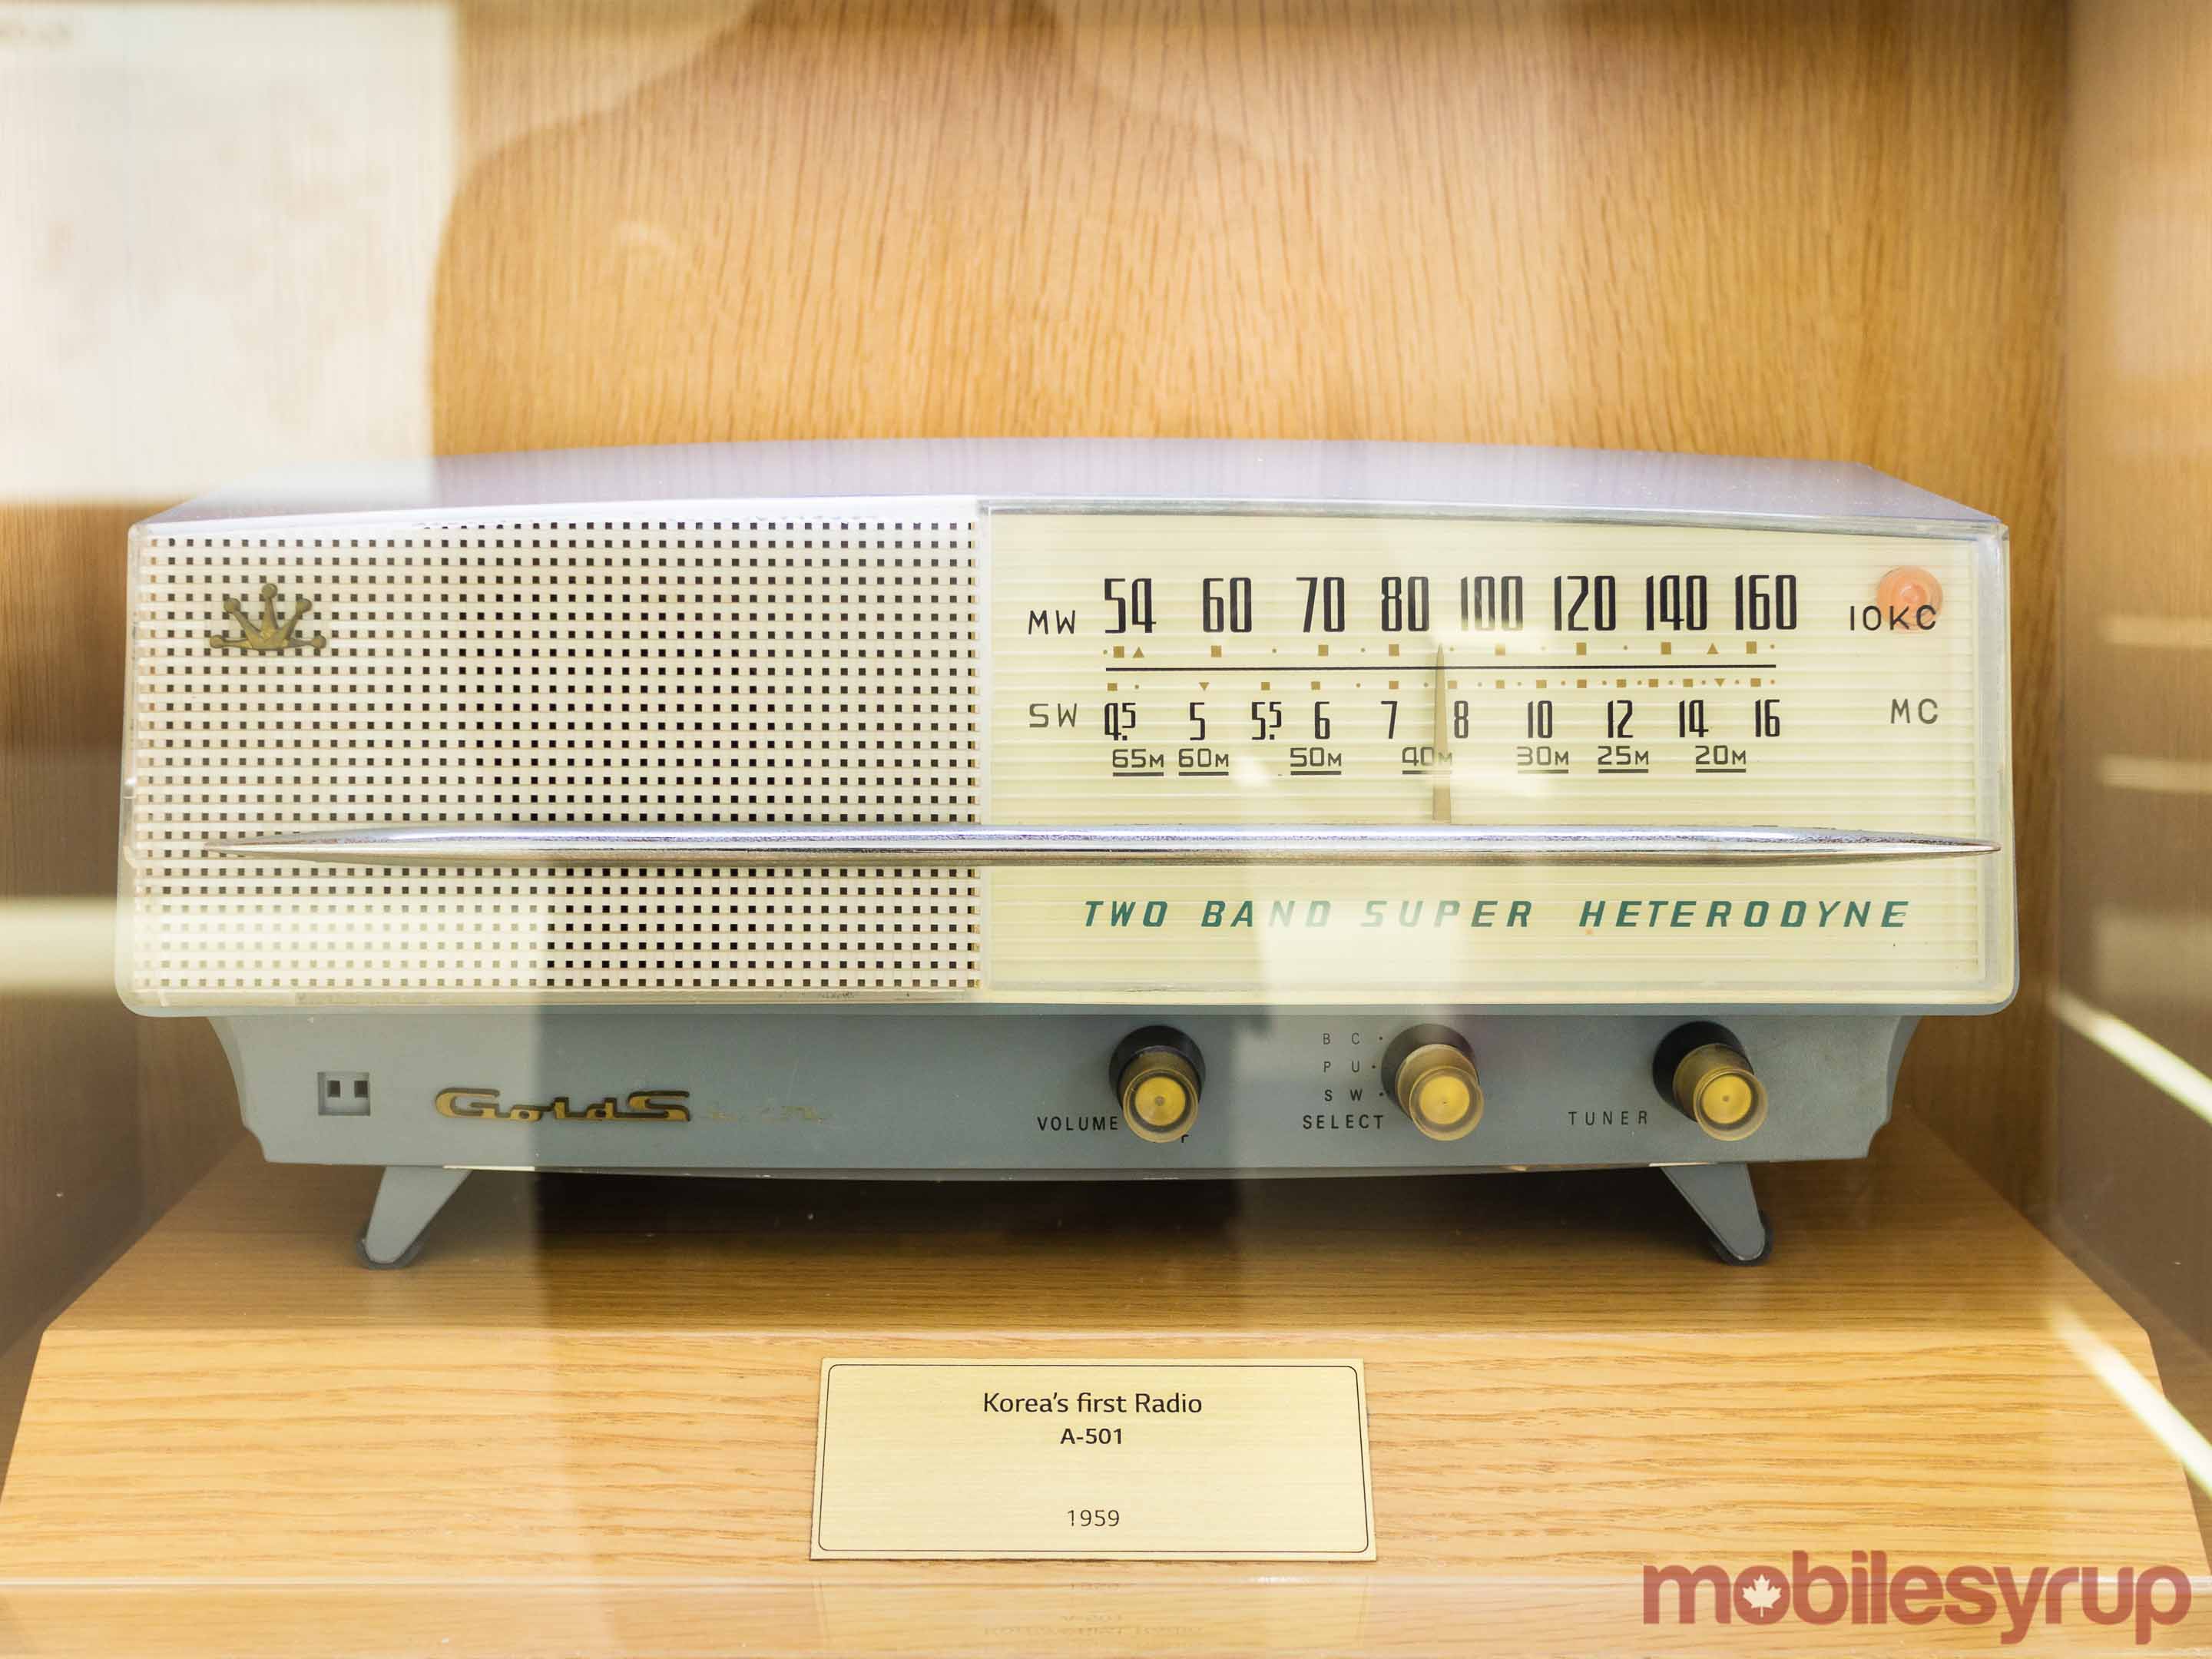 GoldStar A-501 radio